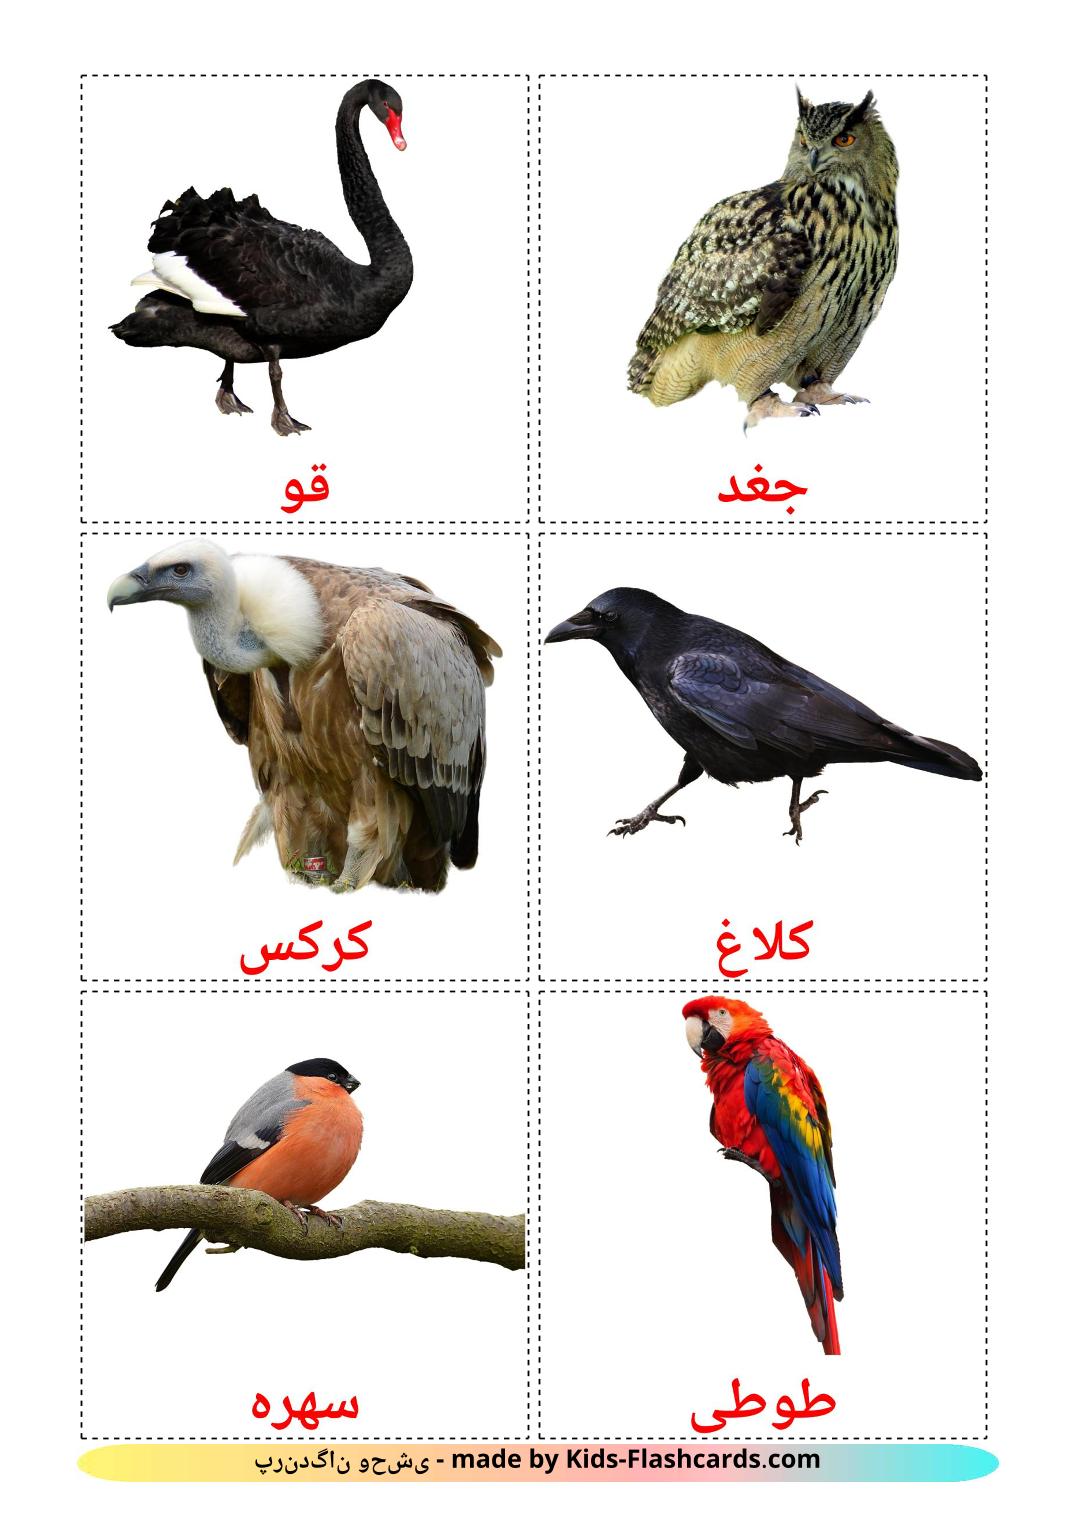 Pájaros salvajes - 18 fichas de persa para imprimir gratis 